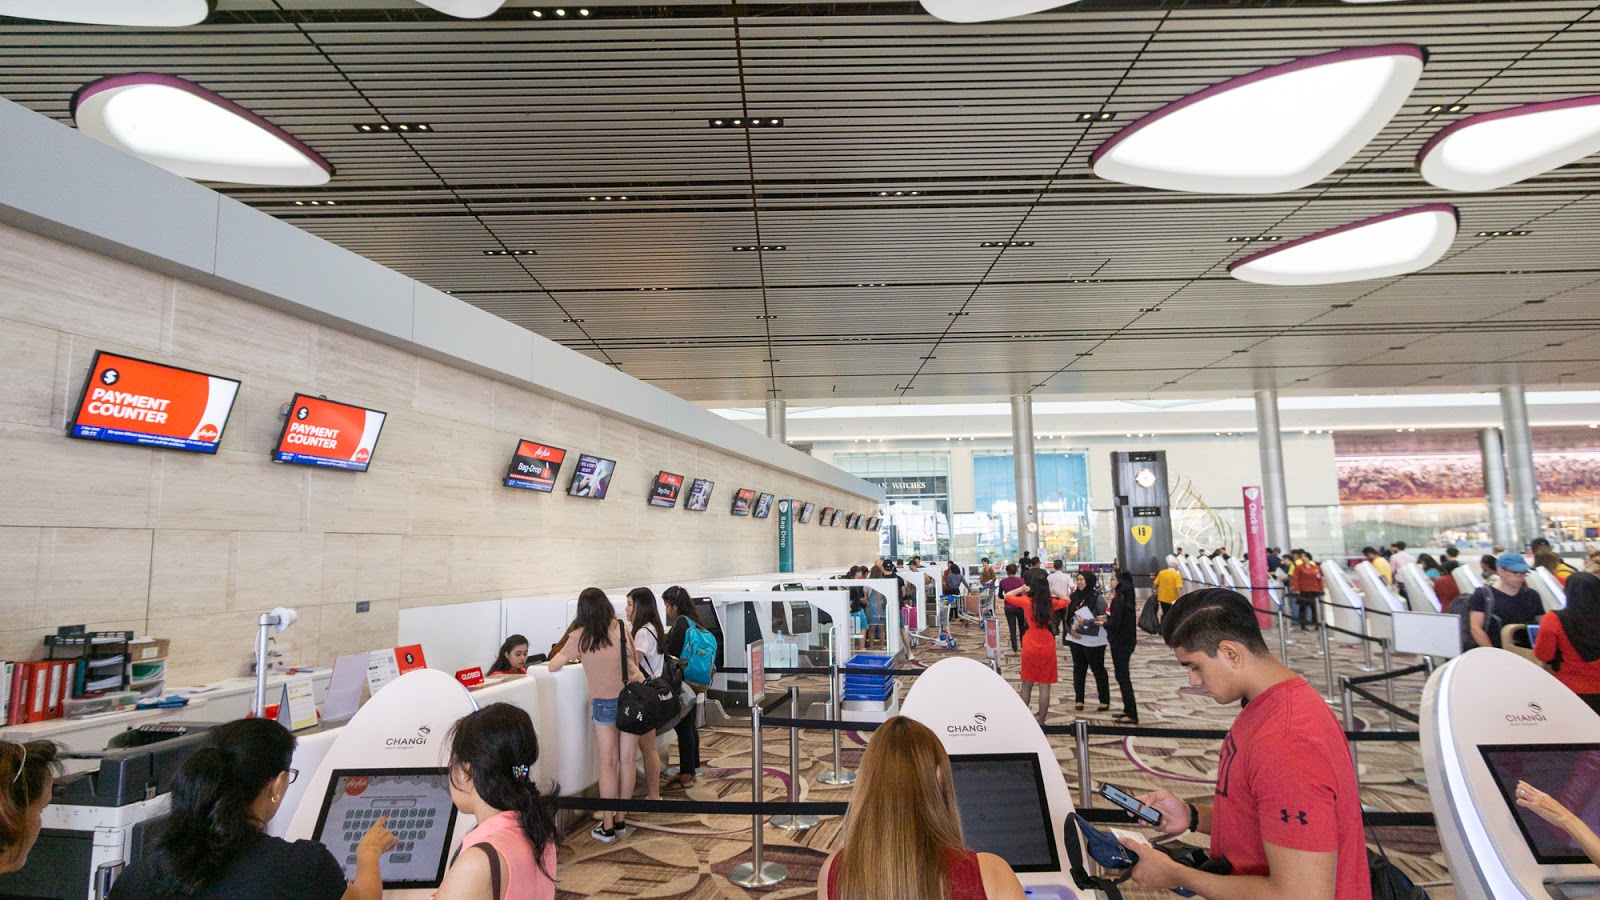 Terminal 4 Check-In at Changi Airport